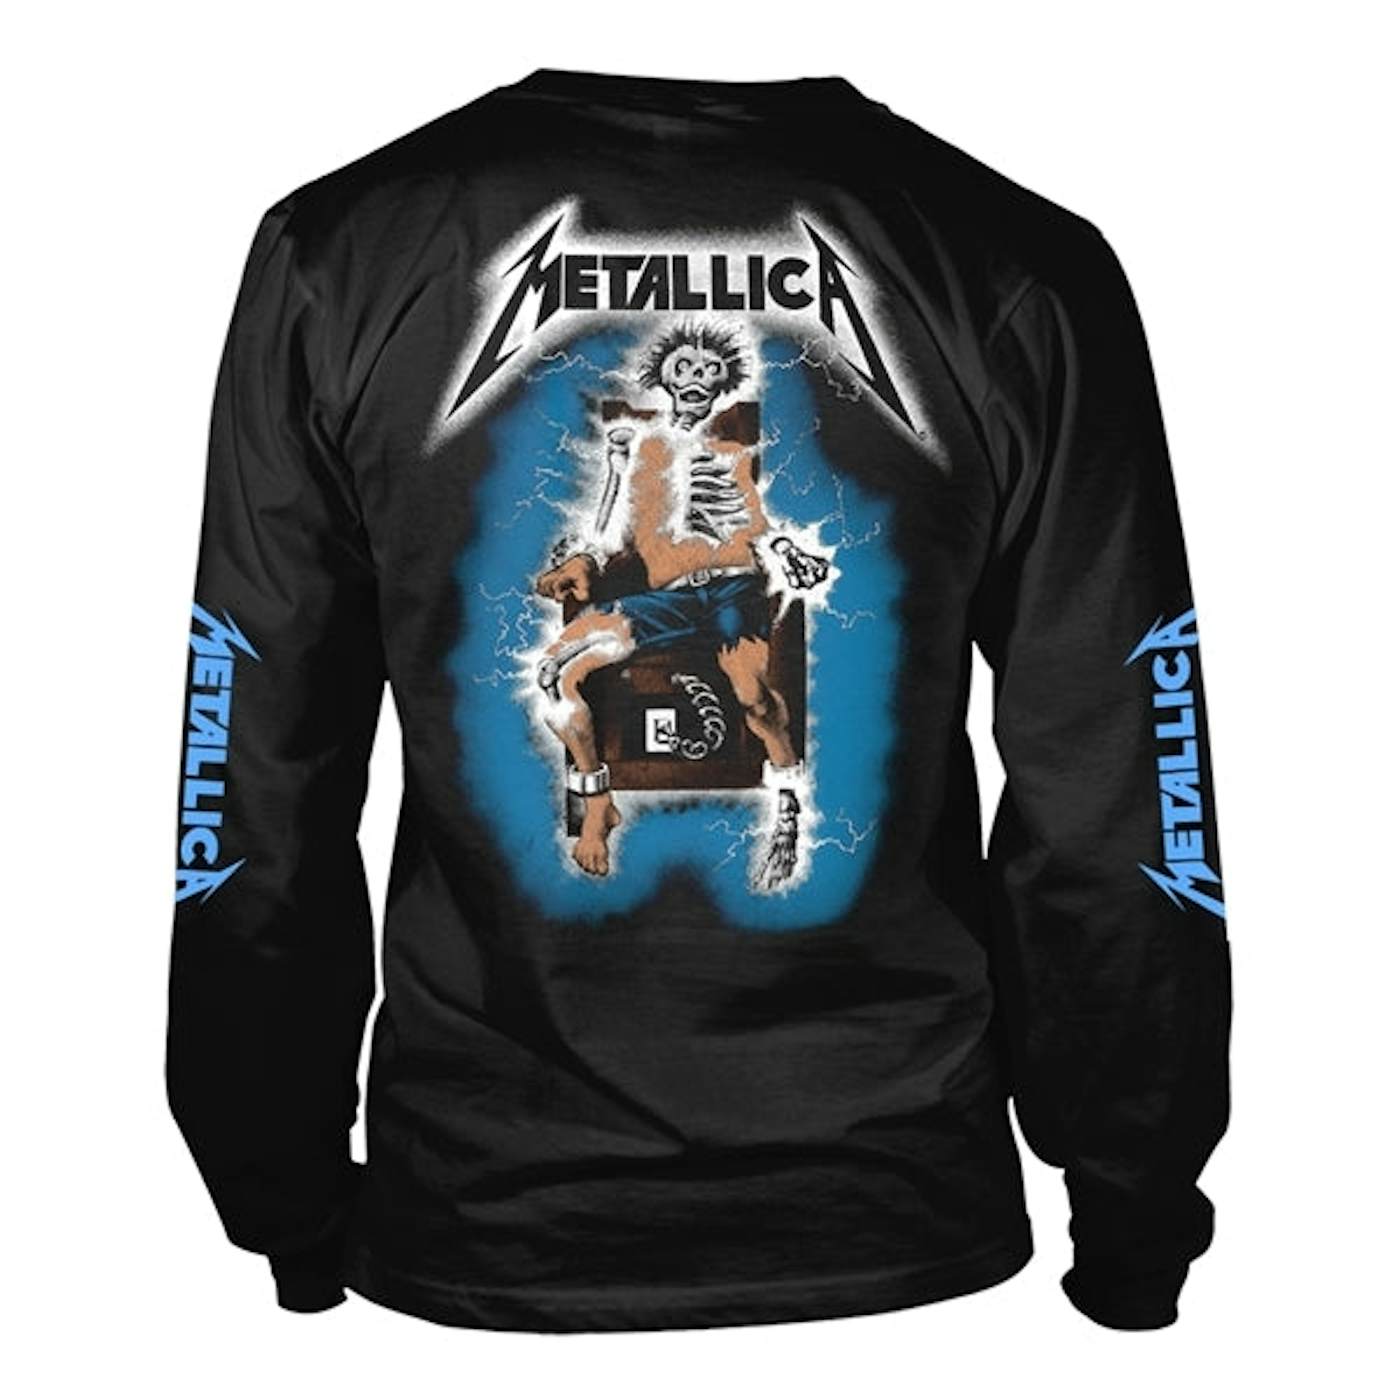 Metallica Long Sleeve T Shirt - Ride The Lightning (Black)